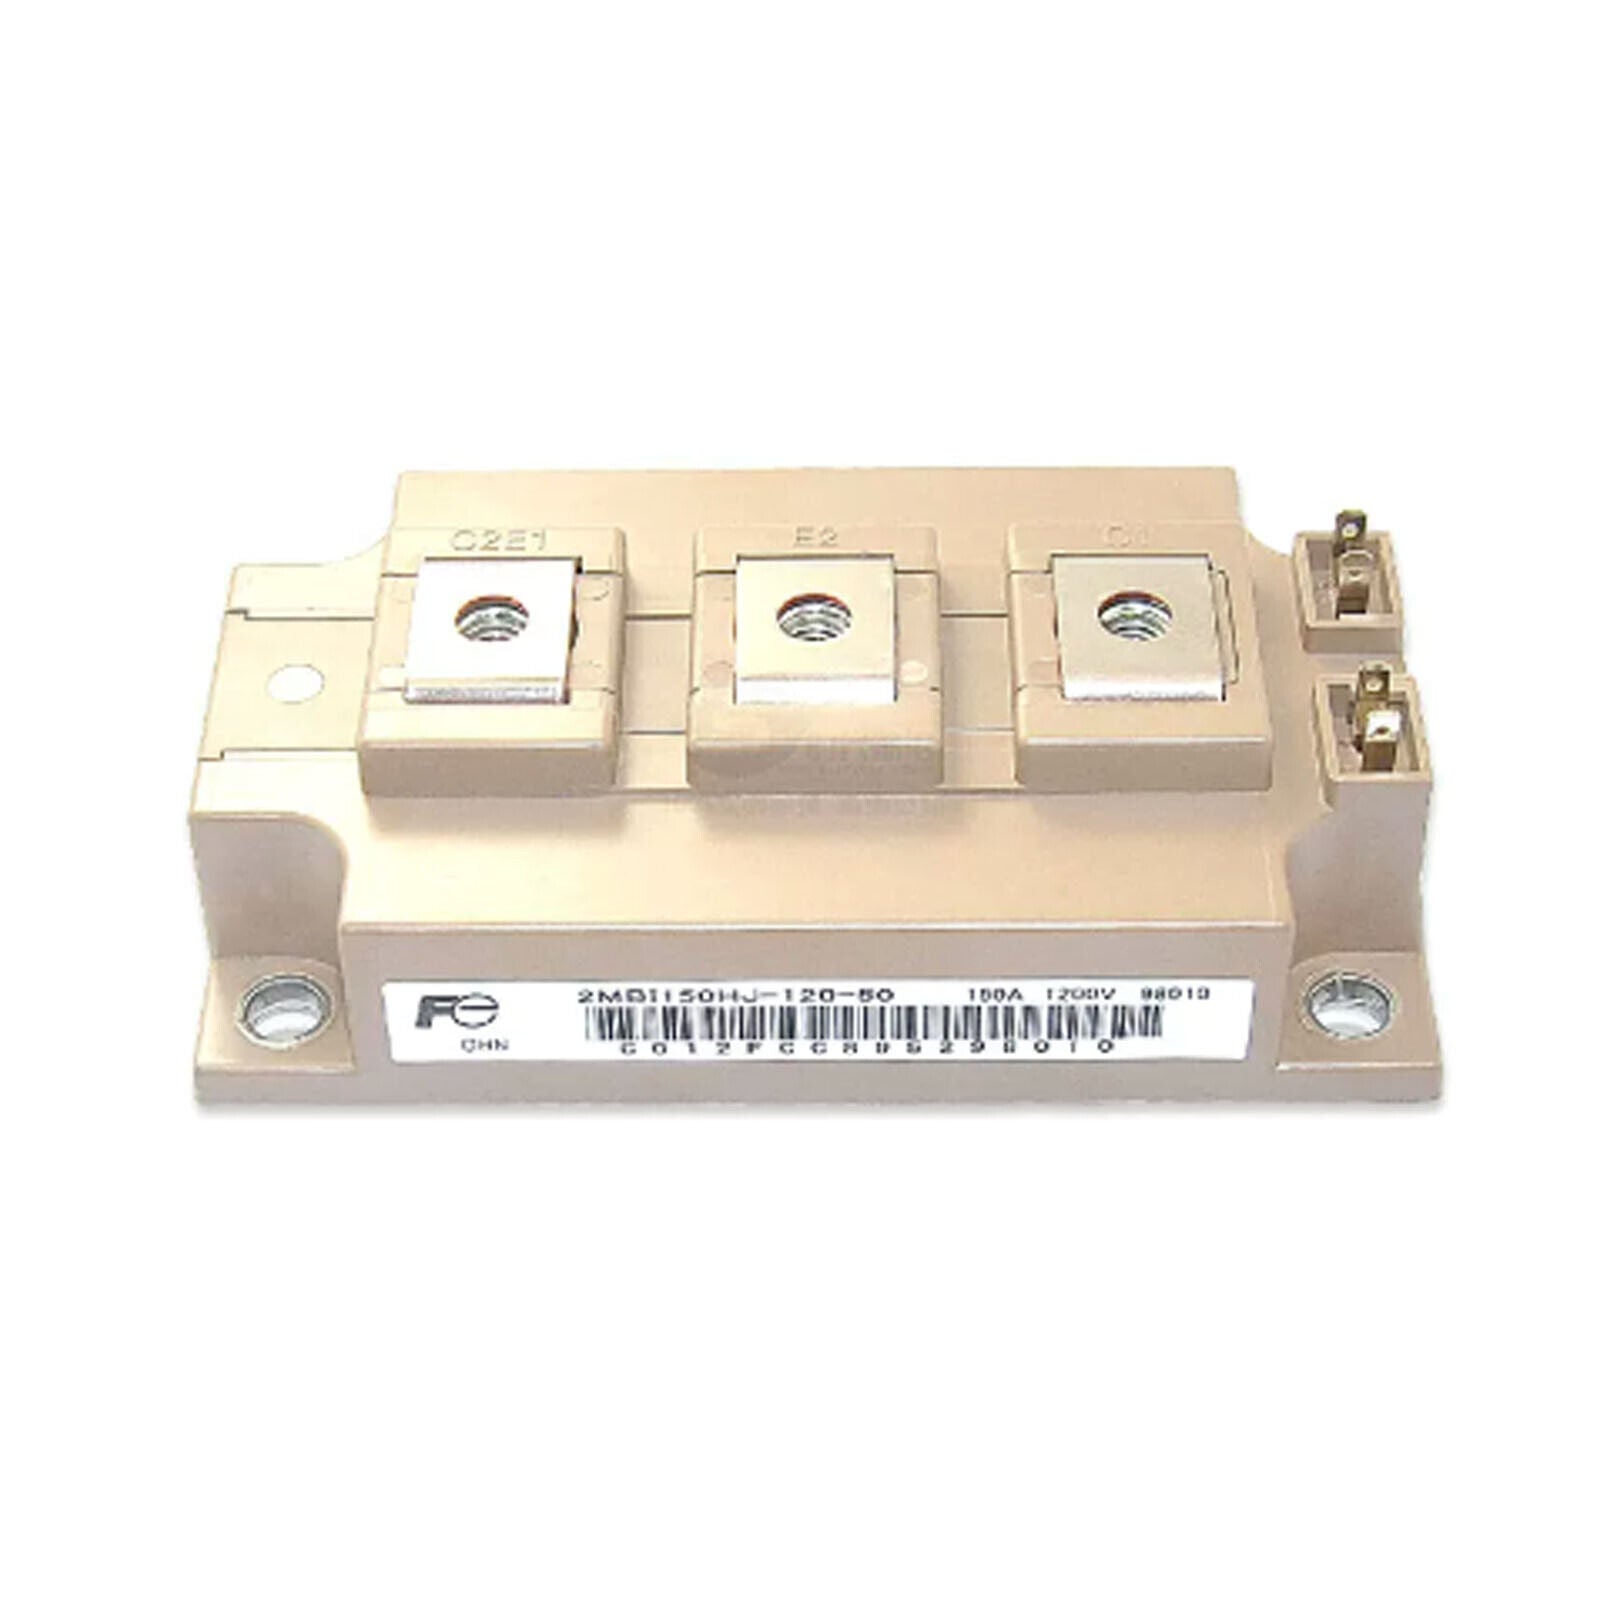 1PCS FUJI 2MBI150HJ-120-50 power supply module